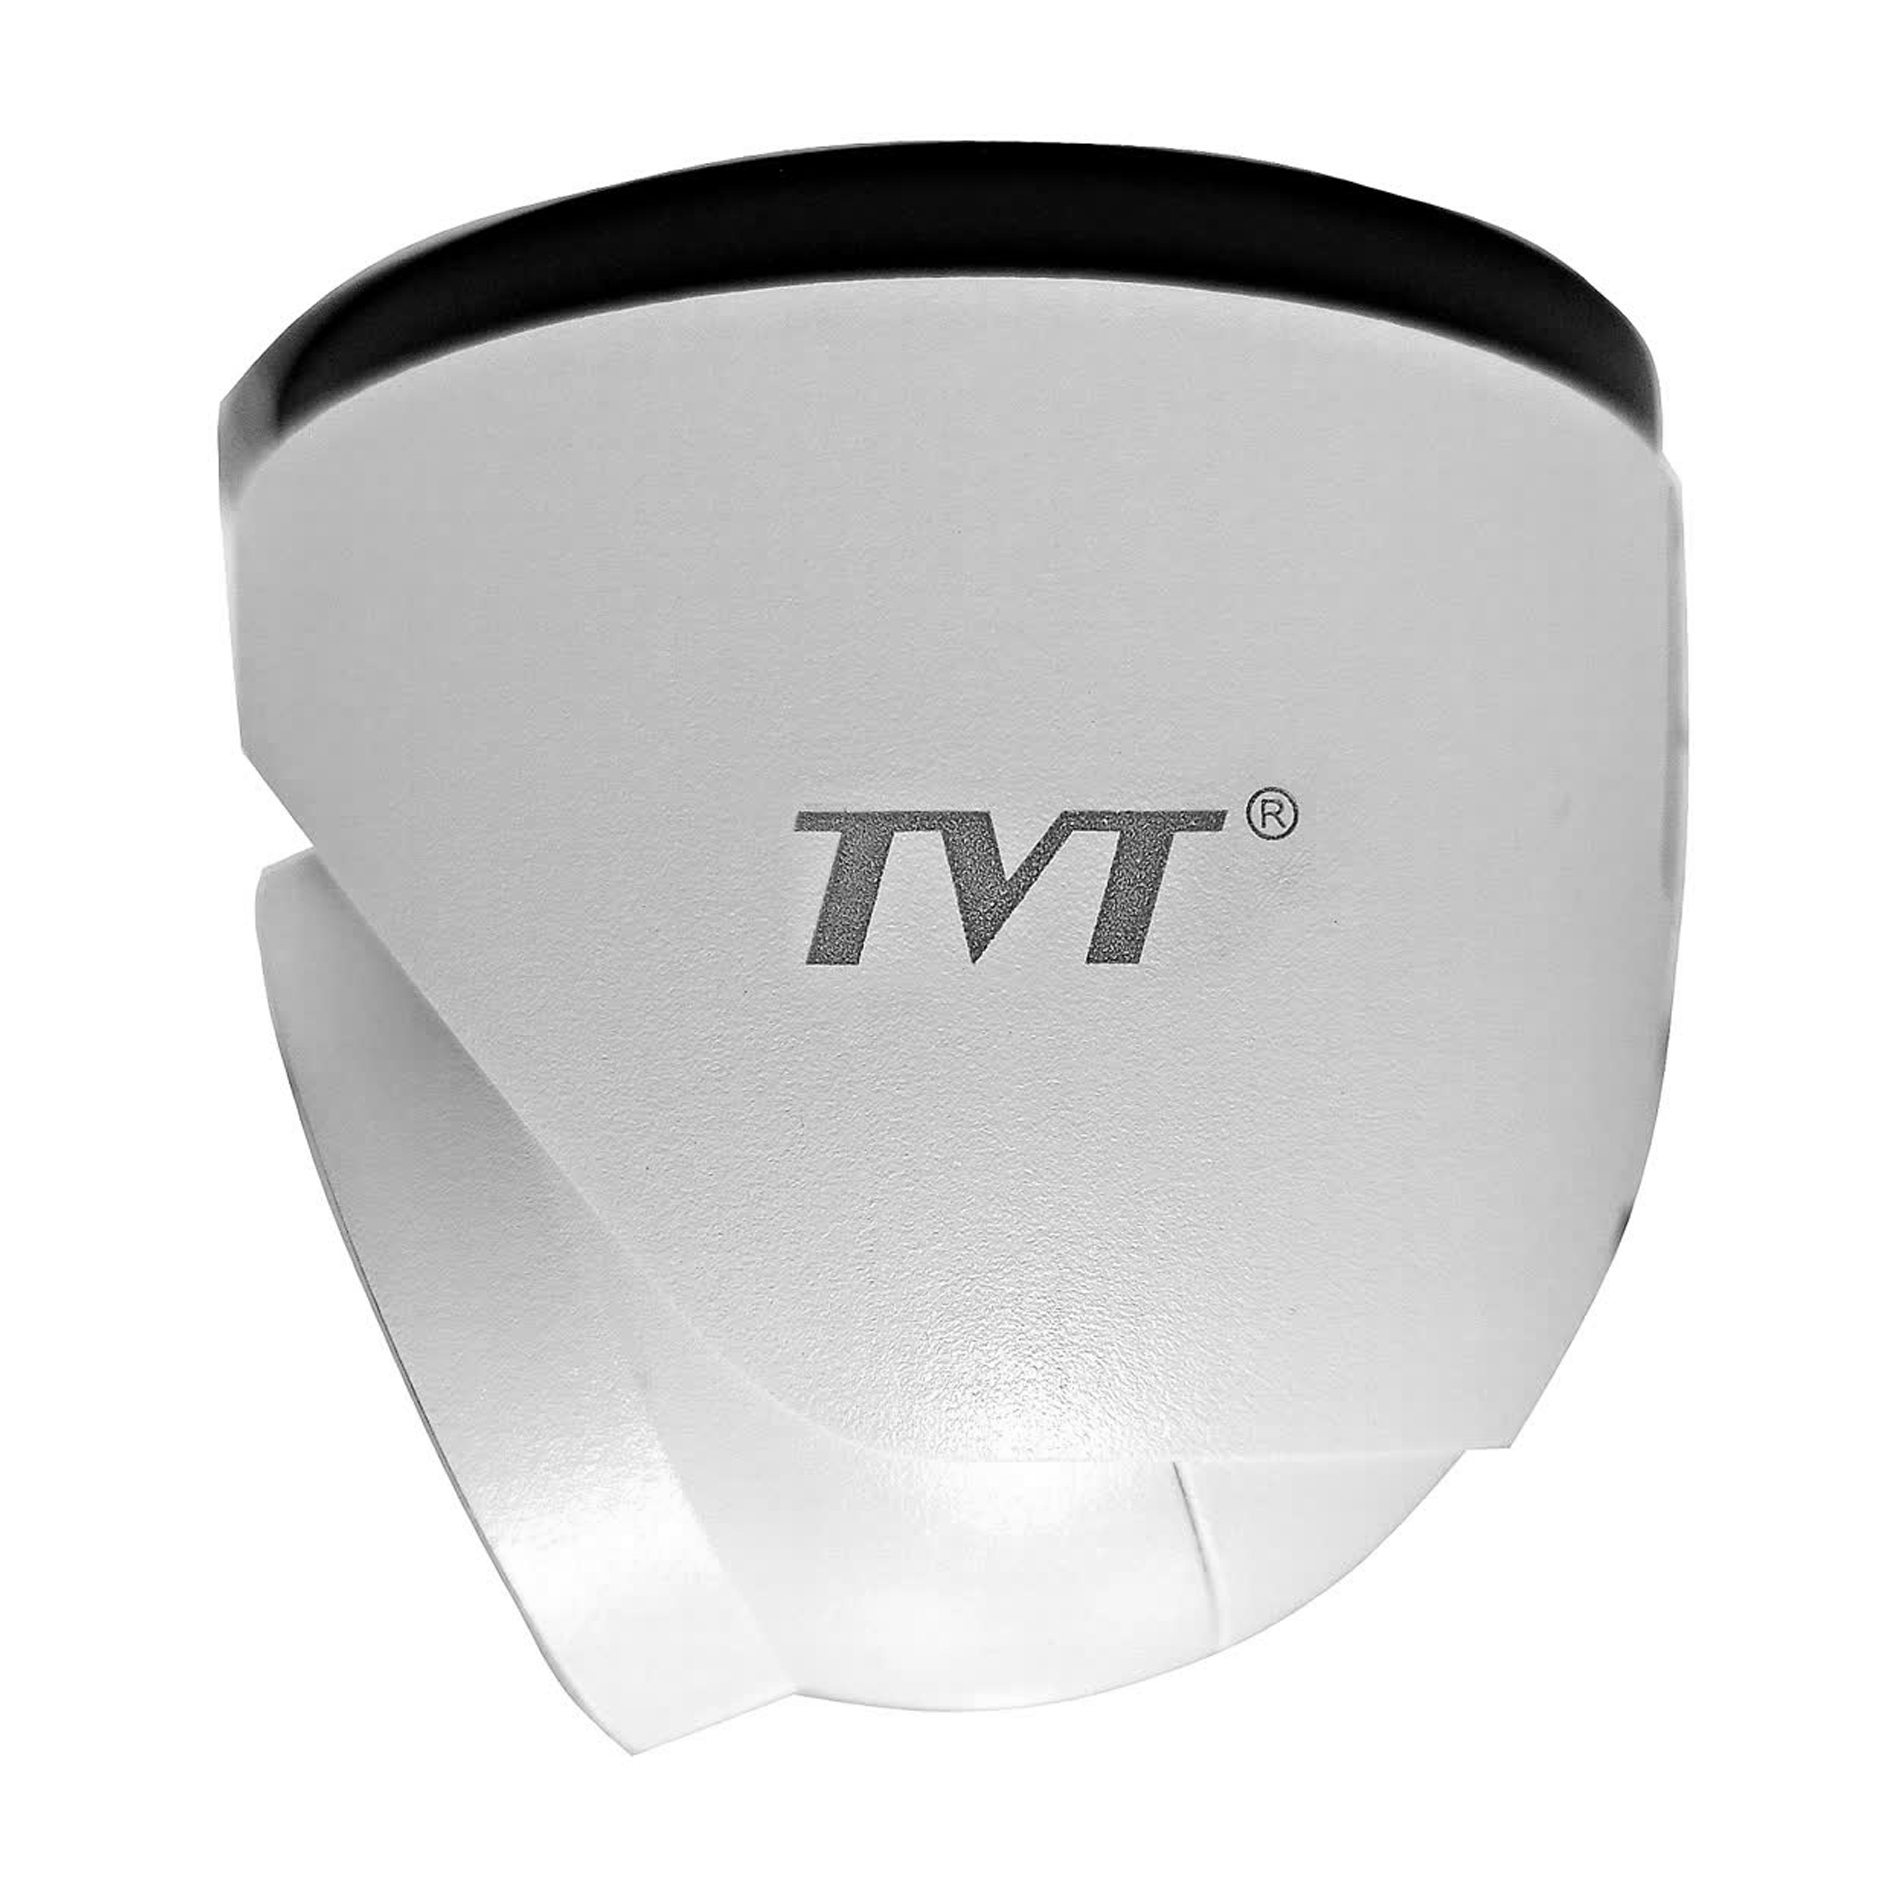 دوربین تی وی تی مدل TVT TD 7524AE3